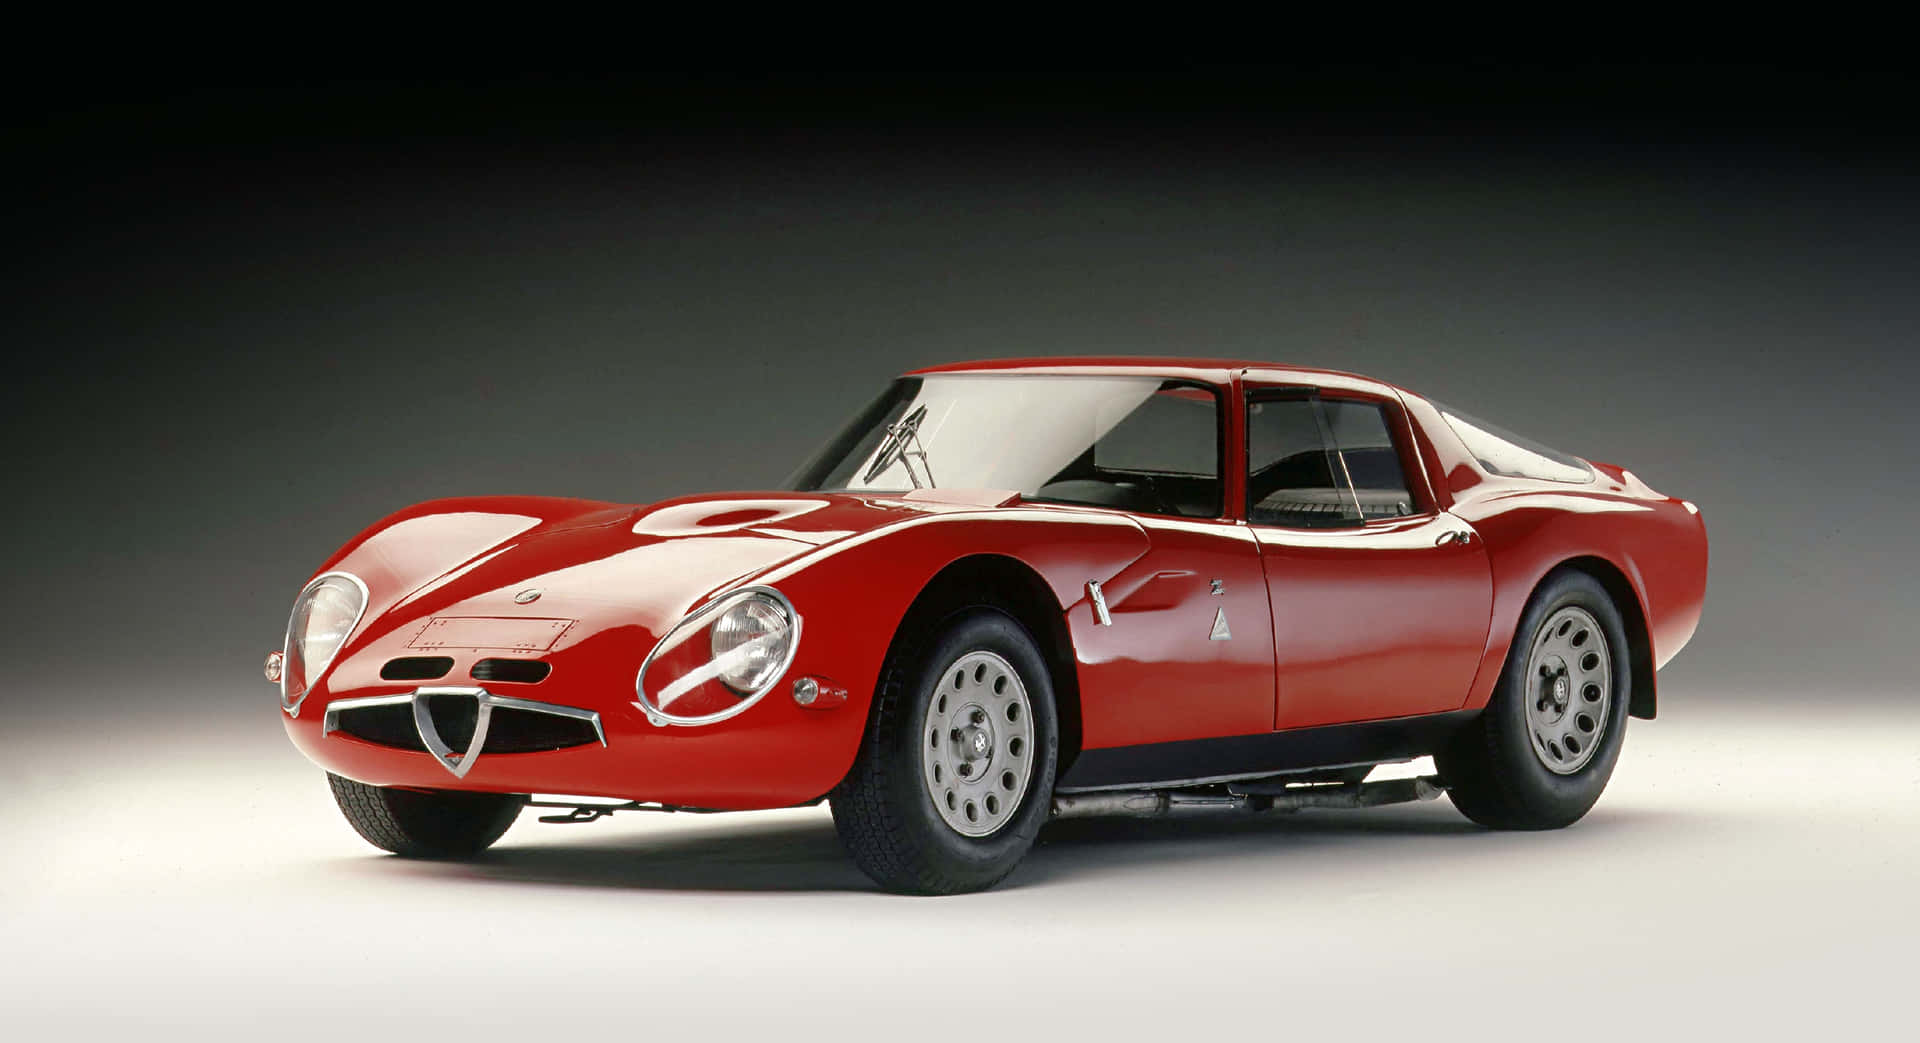 Powerful and beautiful, the Alfa Romeo